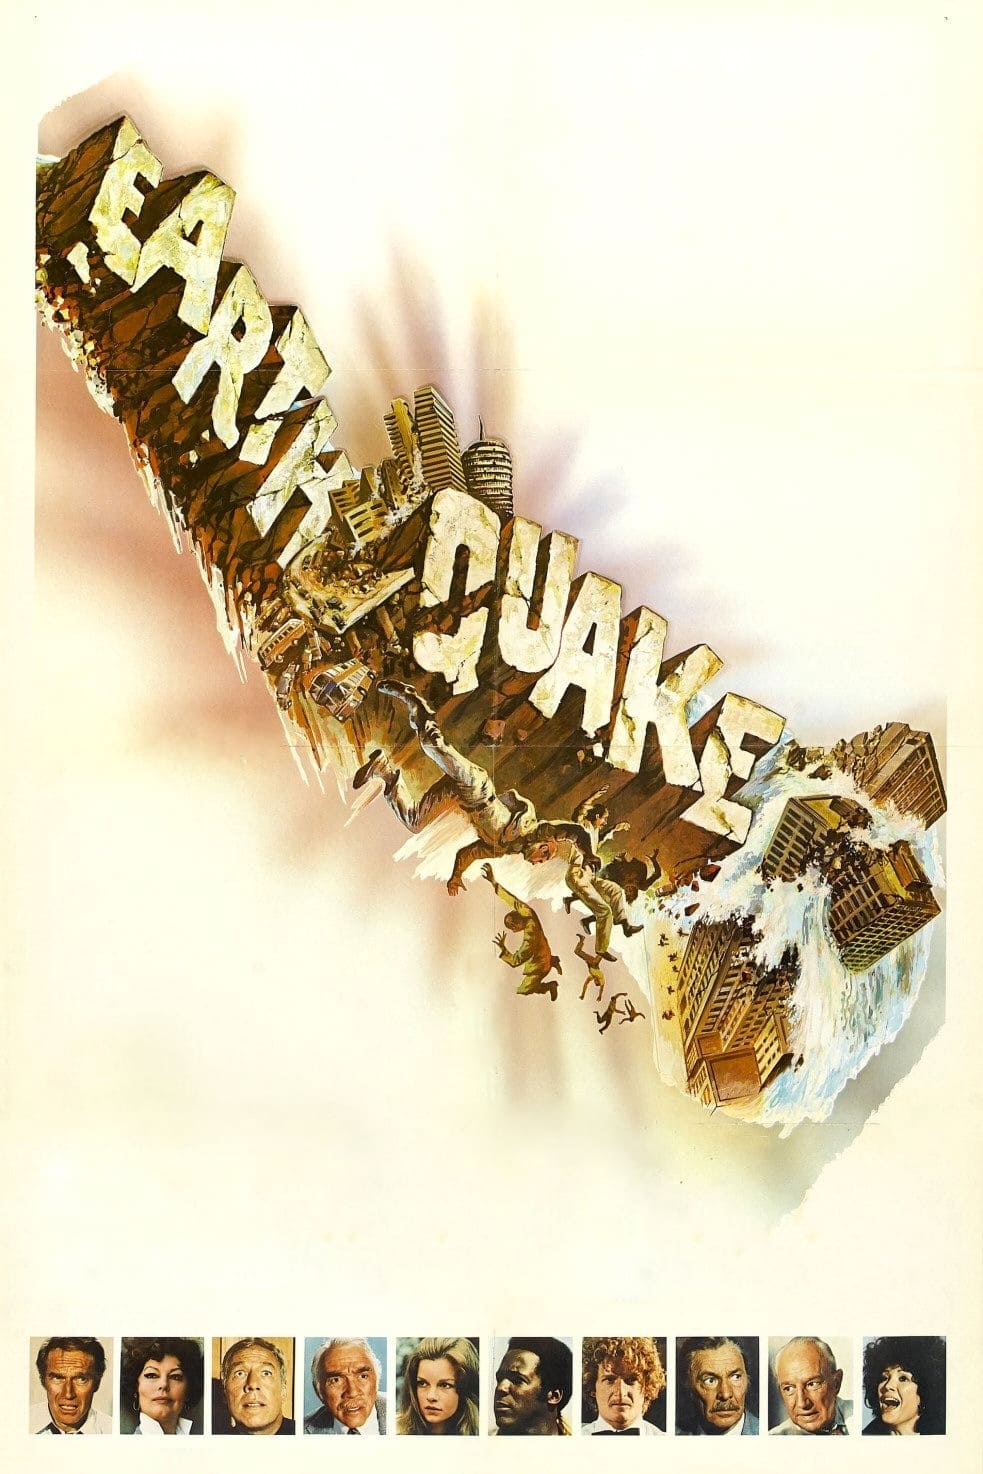 Terremoto (1974)